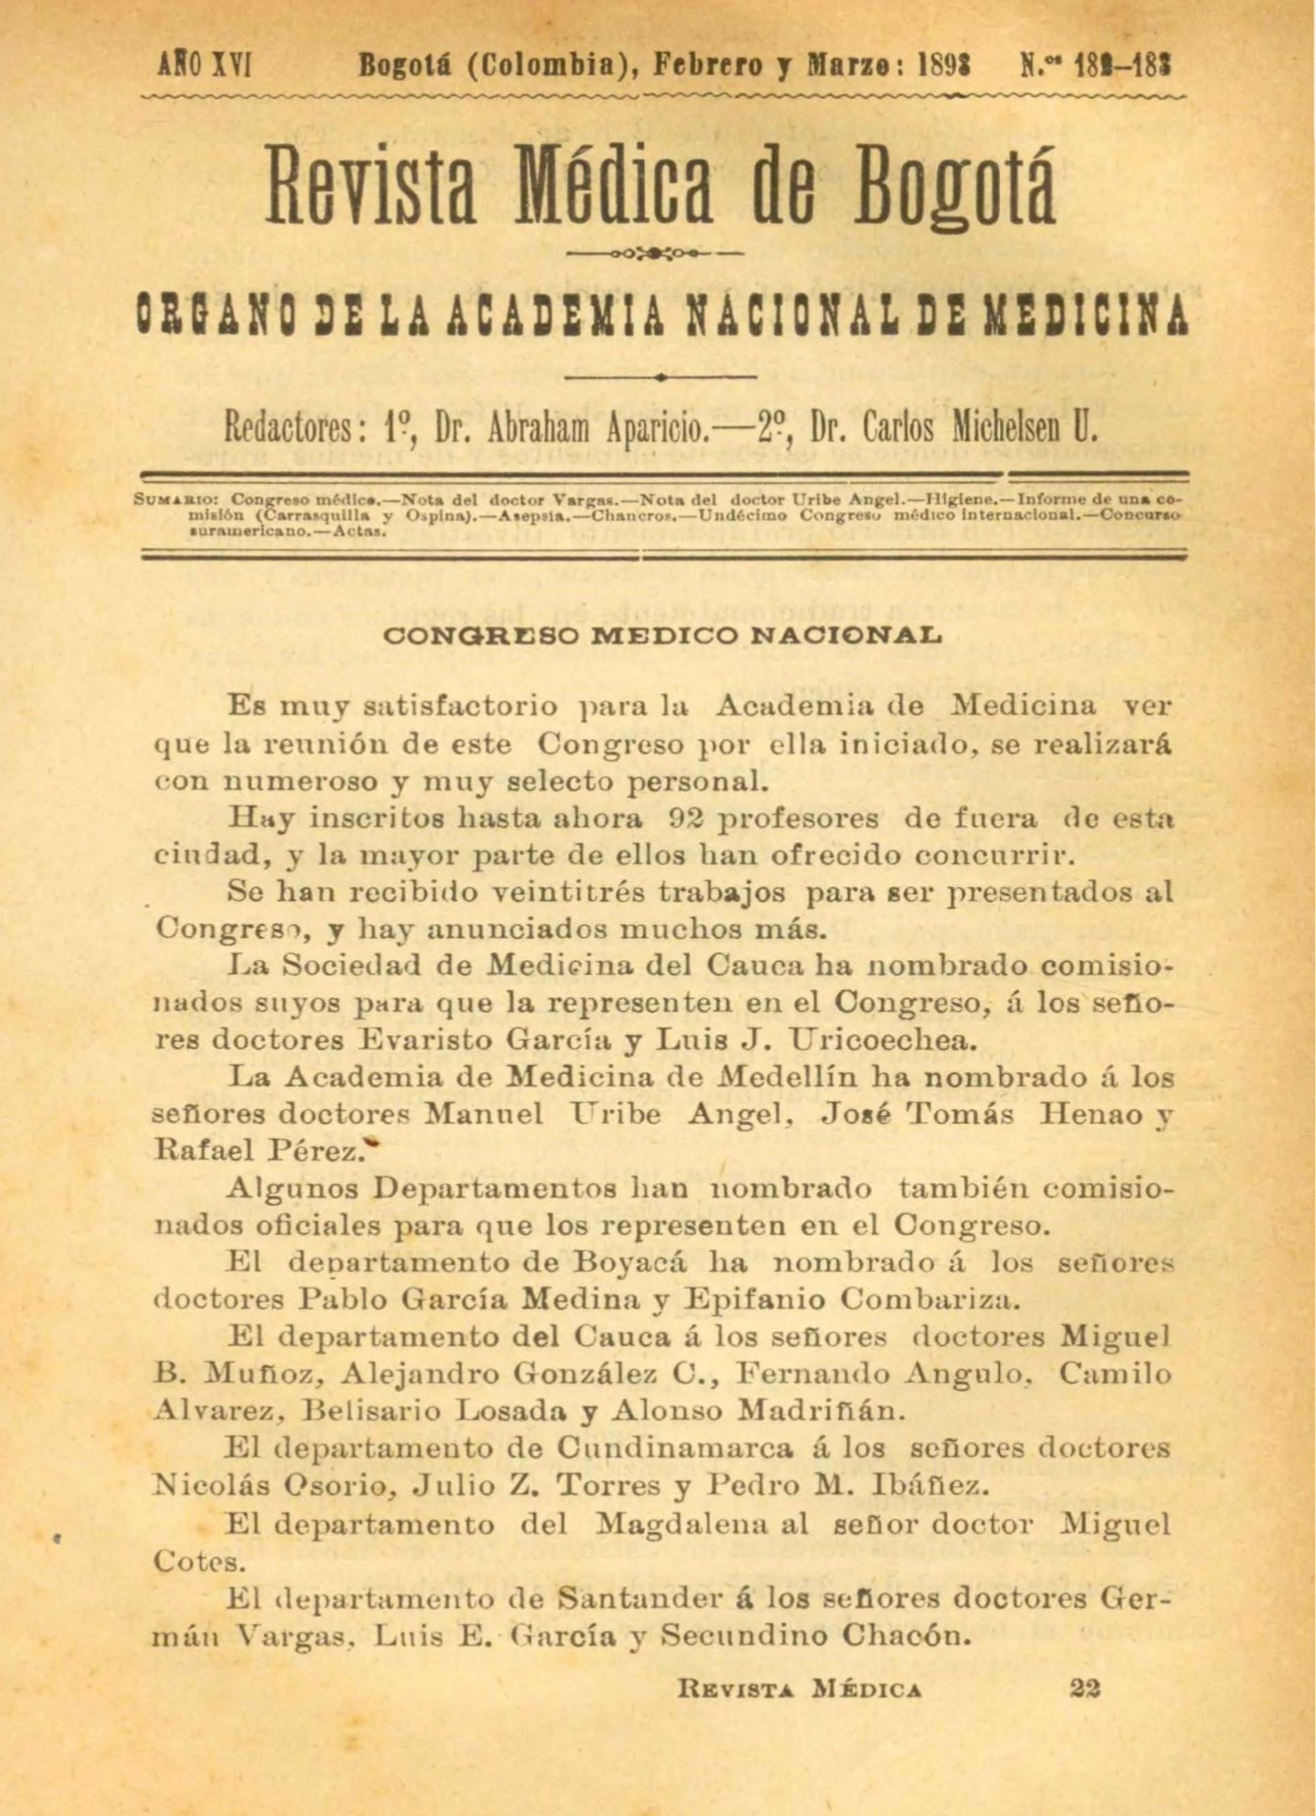 					Ver Vol. 16 Núm. 182-183 (1893): Revista Médica de Bogotá. Serie 16. Febrero-Marzo de 1893. Núm. 182-183
				